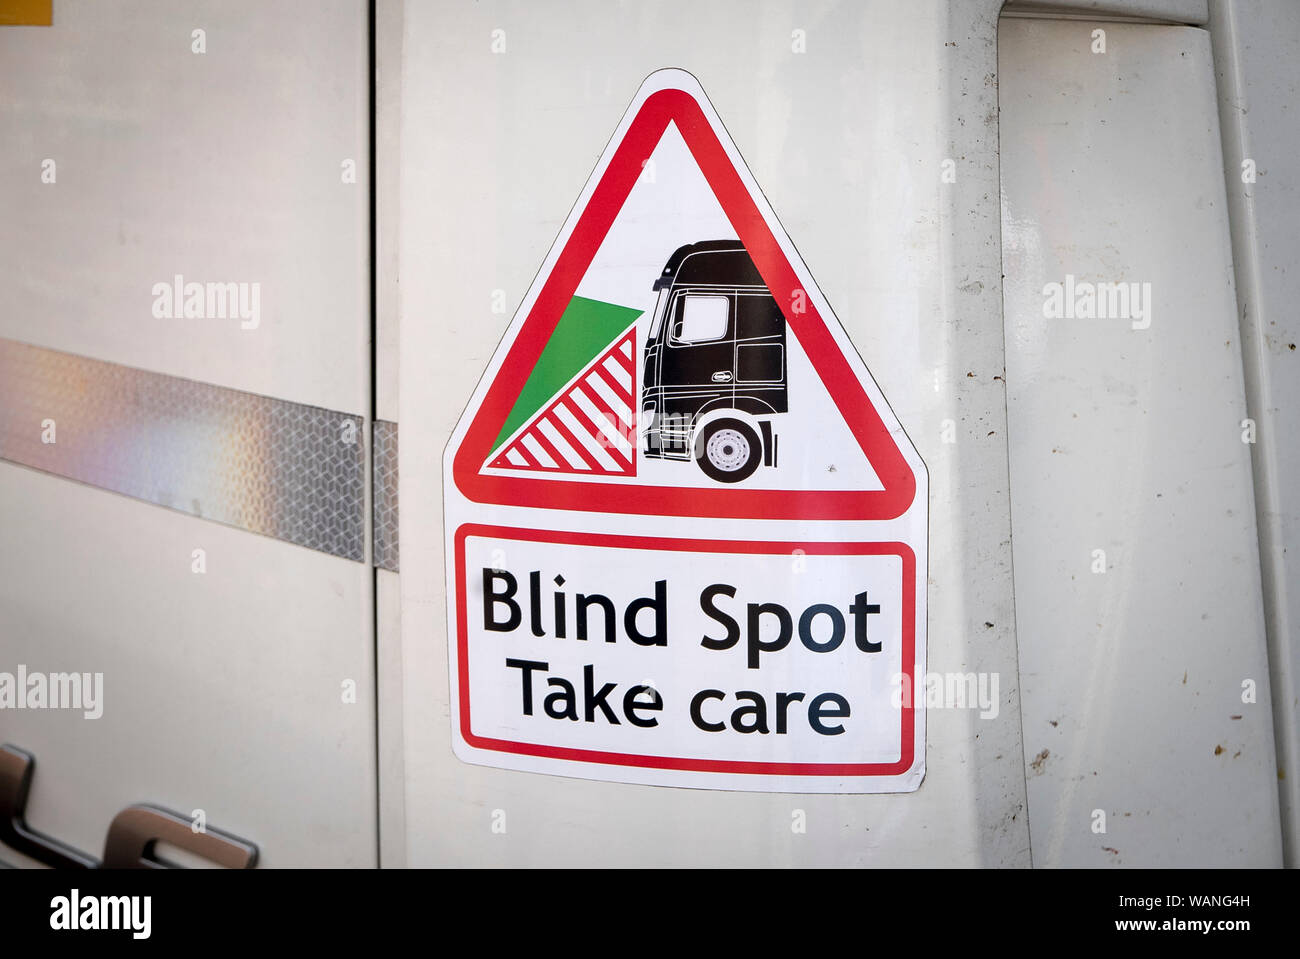 Blind Spot Take Care Sign